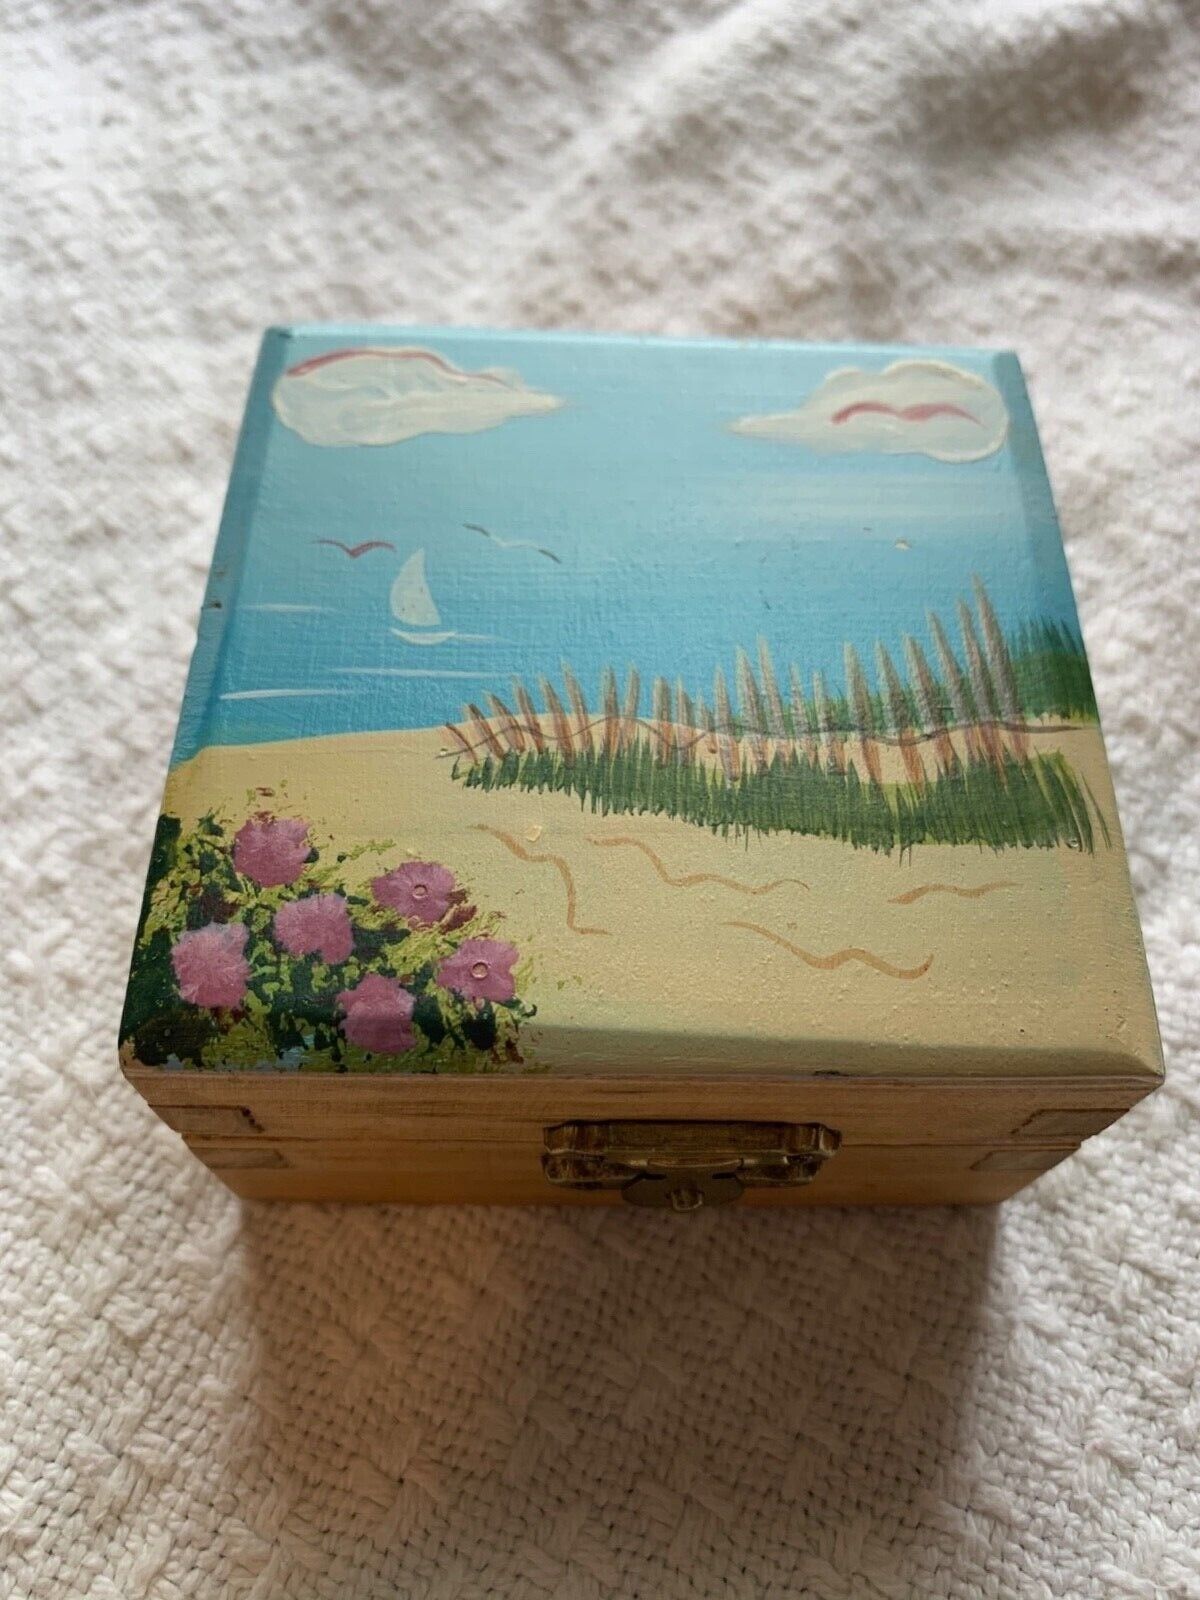 Sea Level Designs Inc. Tiny Nautical Box Painted Mini for jewellry or trinkets